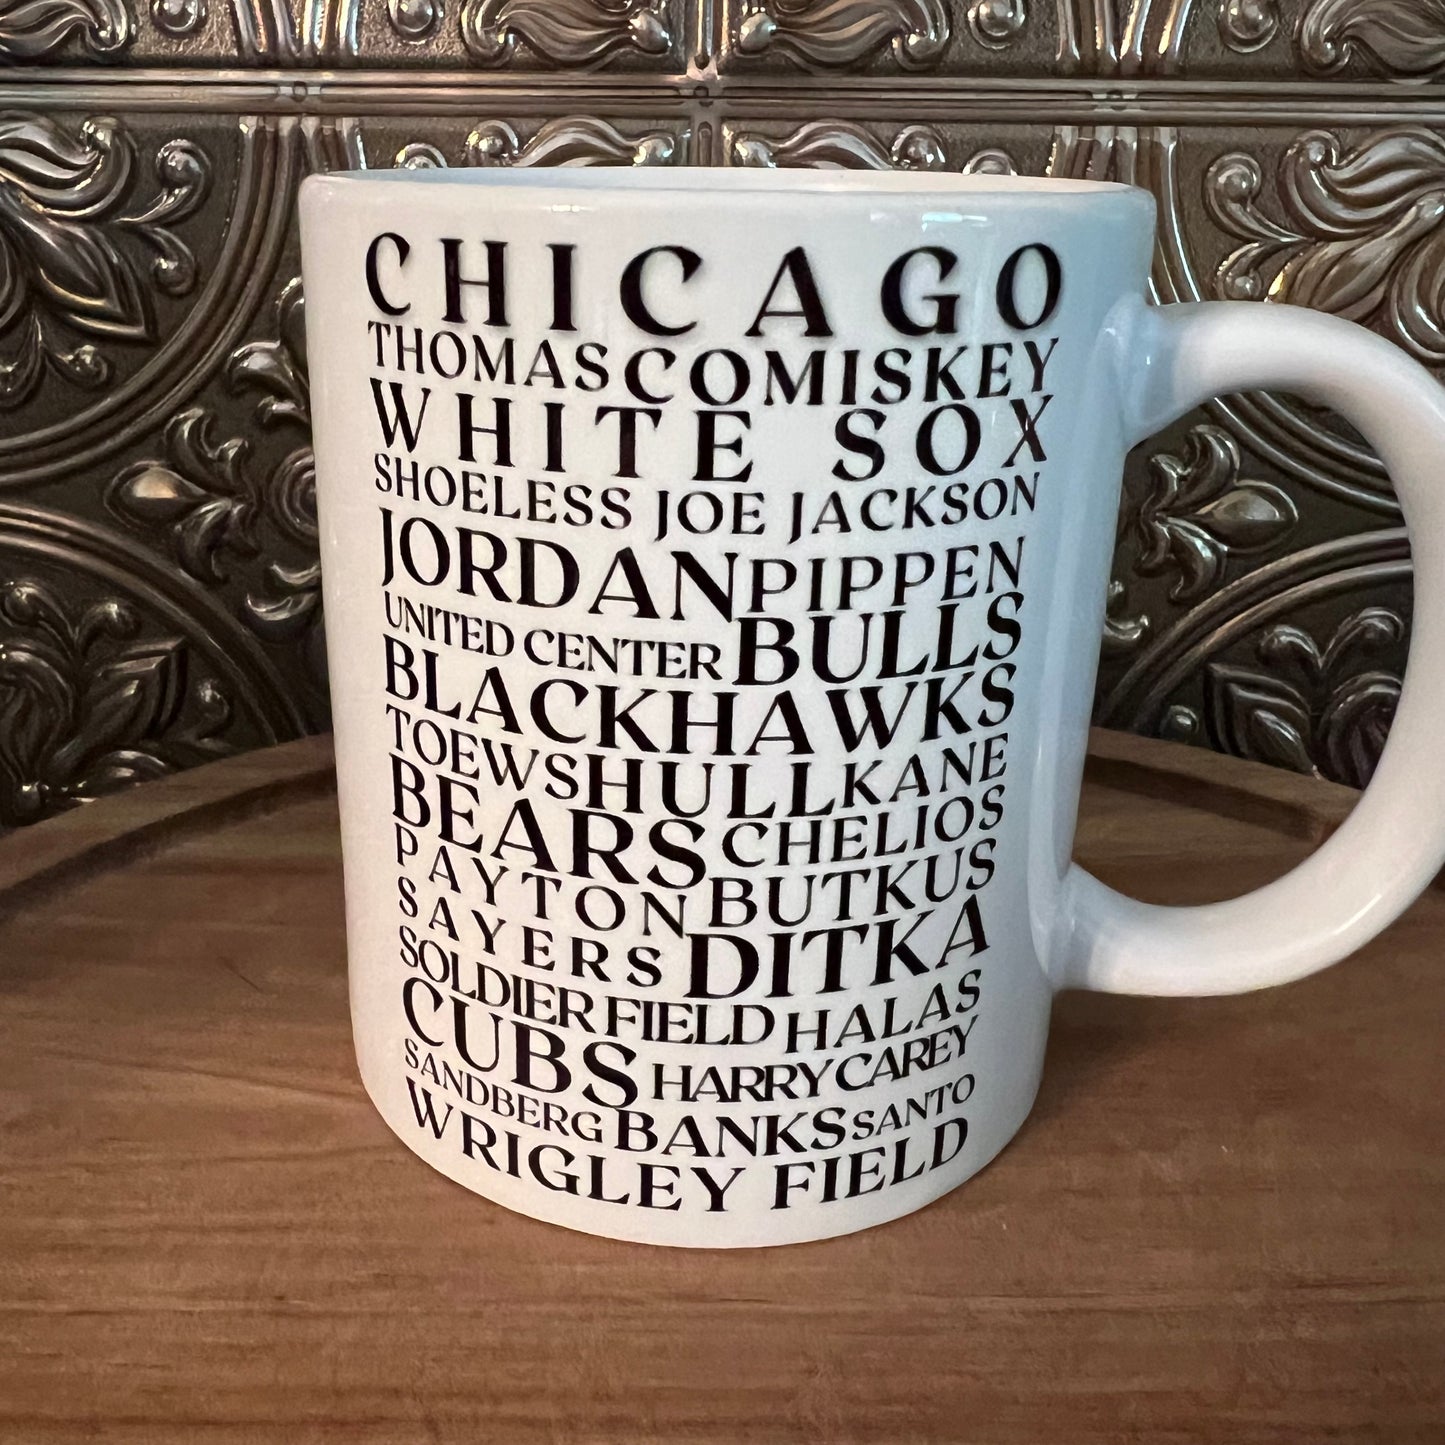 Chicago Mug l Chicago Sports Mug l Chicago Sports Mug Gift l Gifts for Her l Gifts for Him l Collectible Mug l Chicago Mug Gift